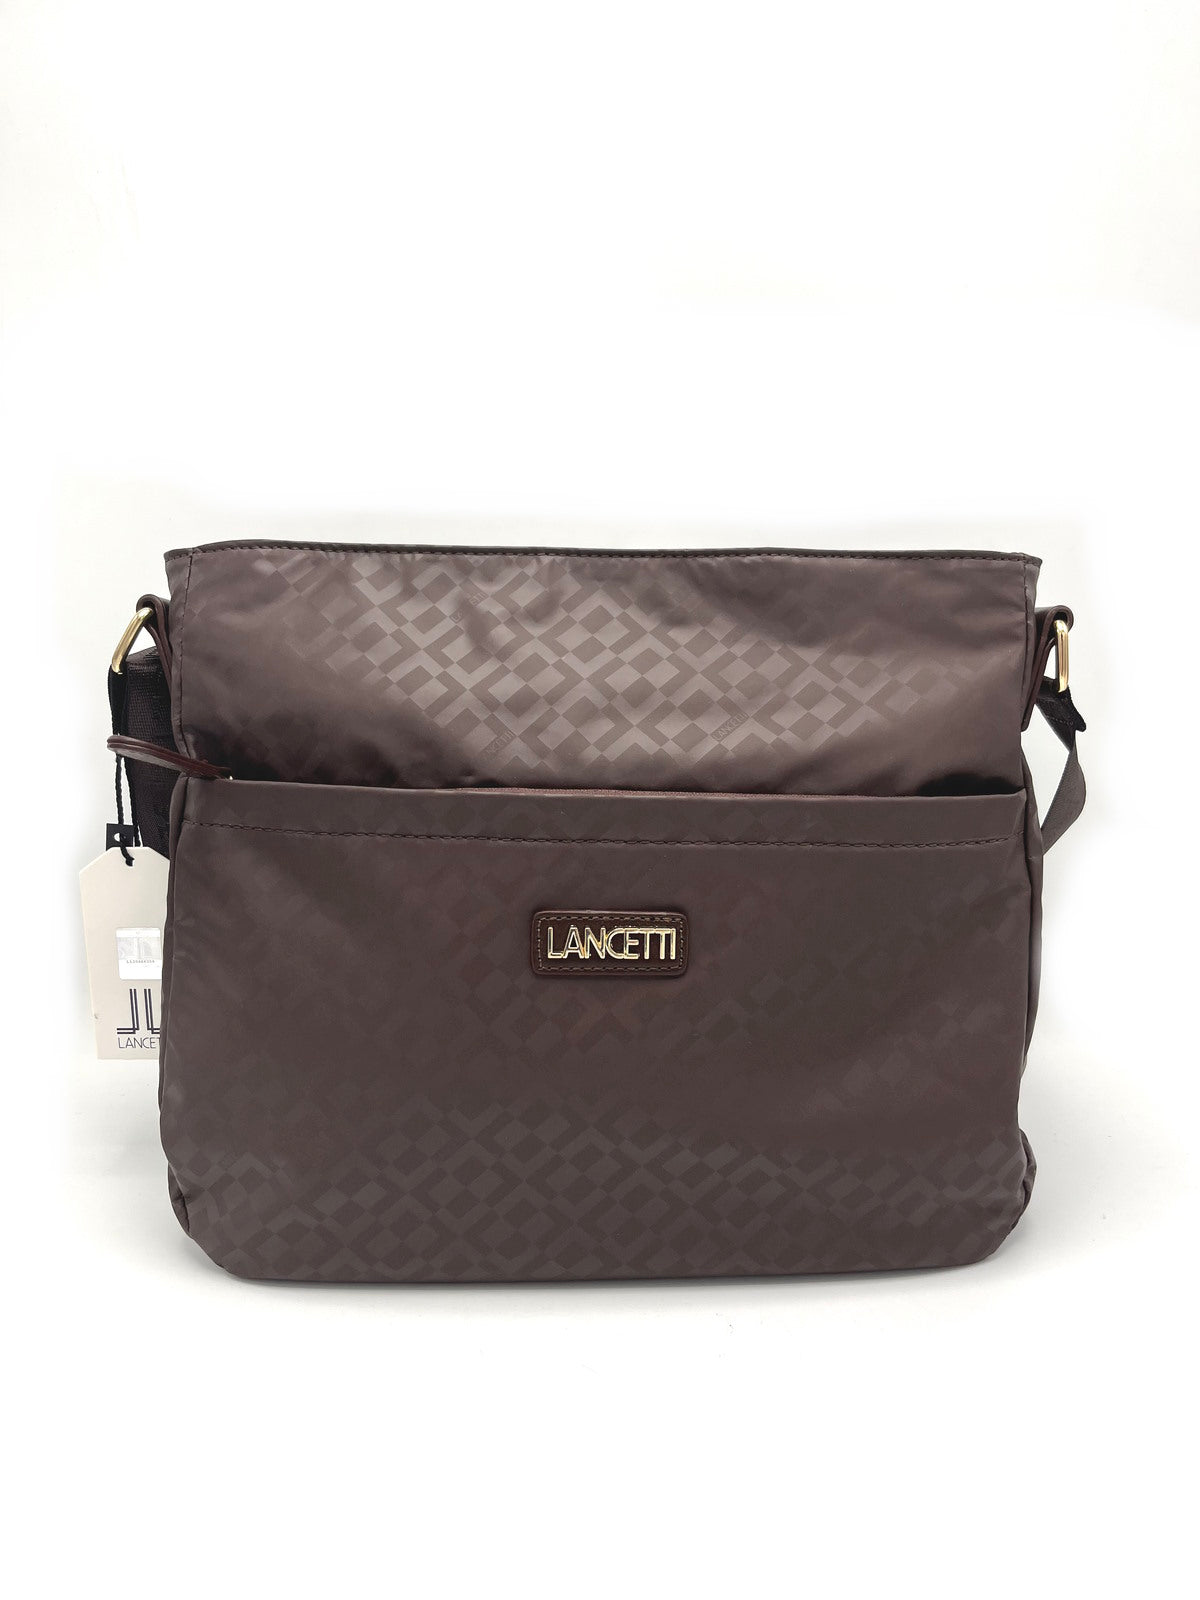 Shoulder bag, brand Lancetti, art. LL100-2.290